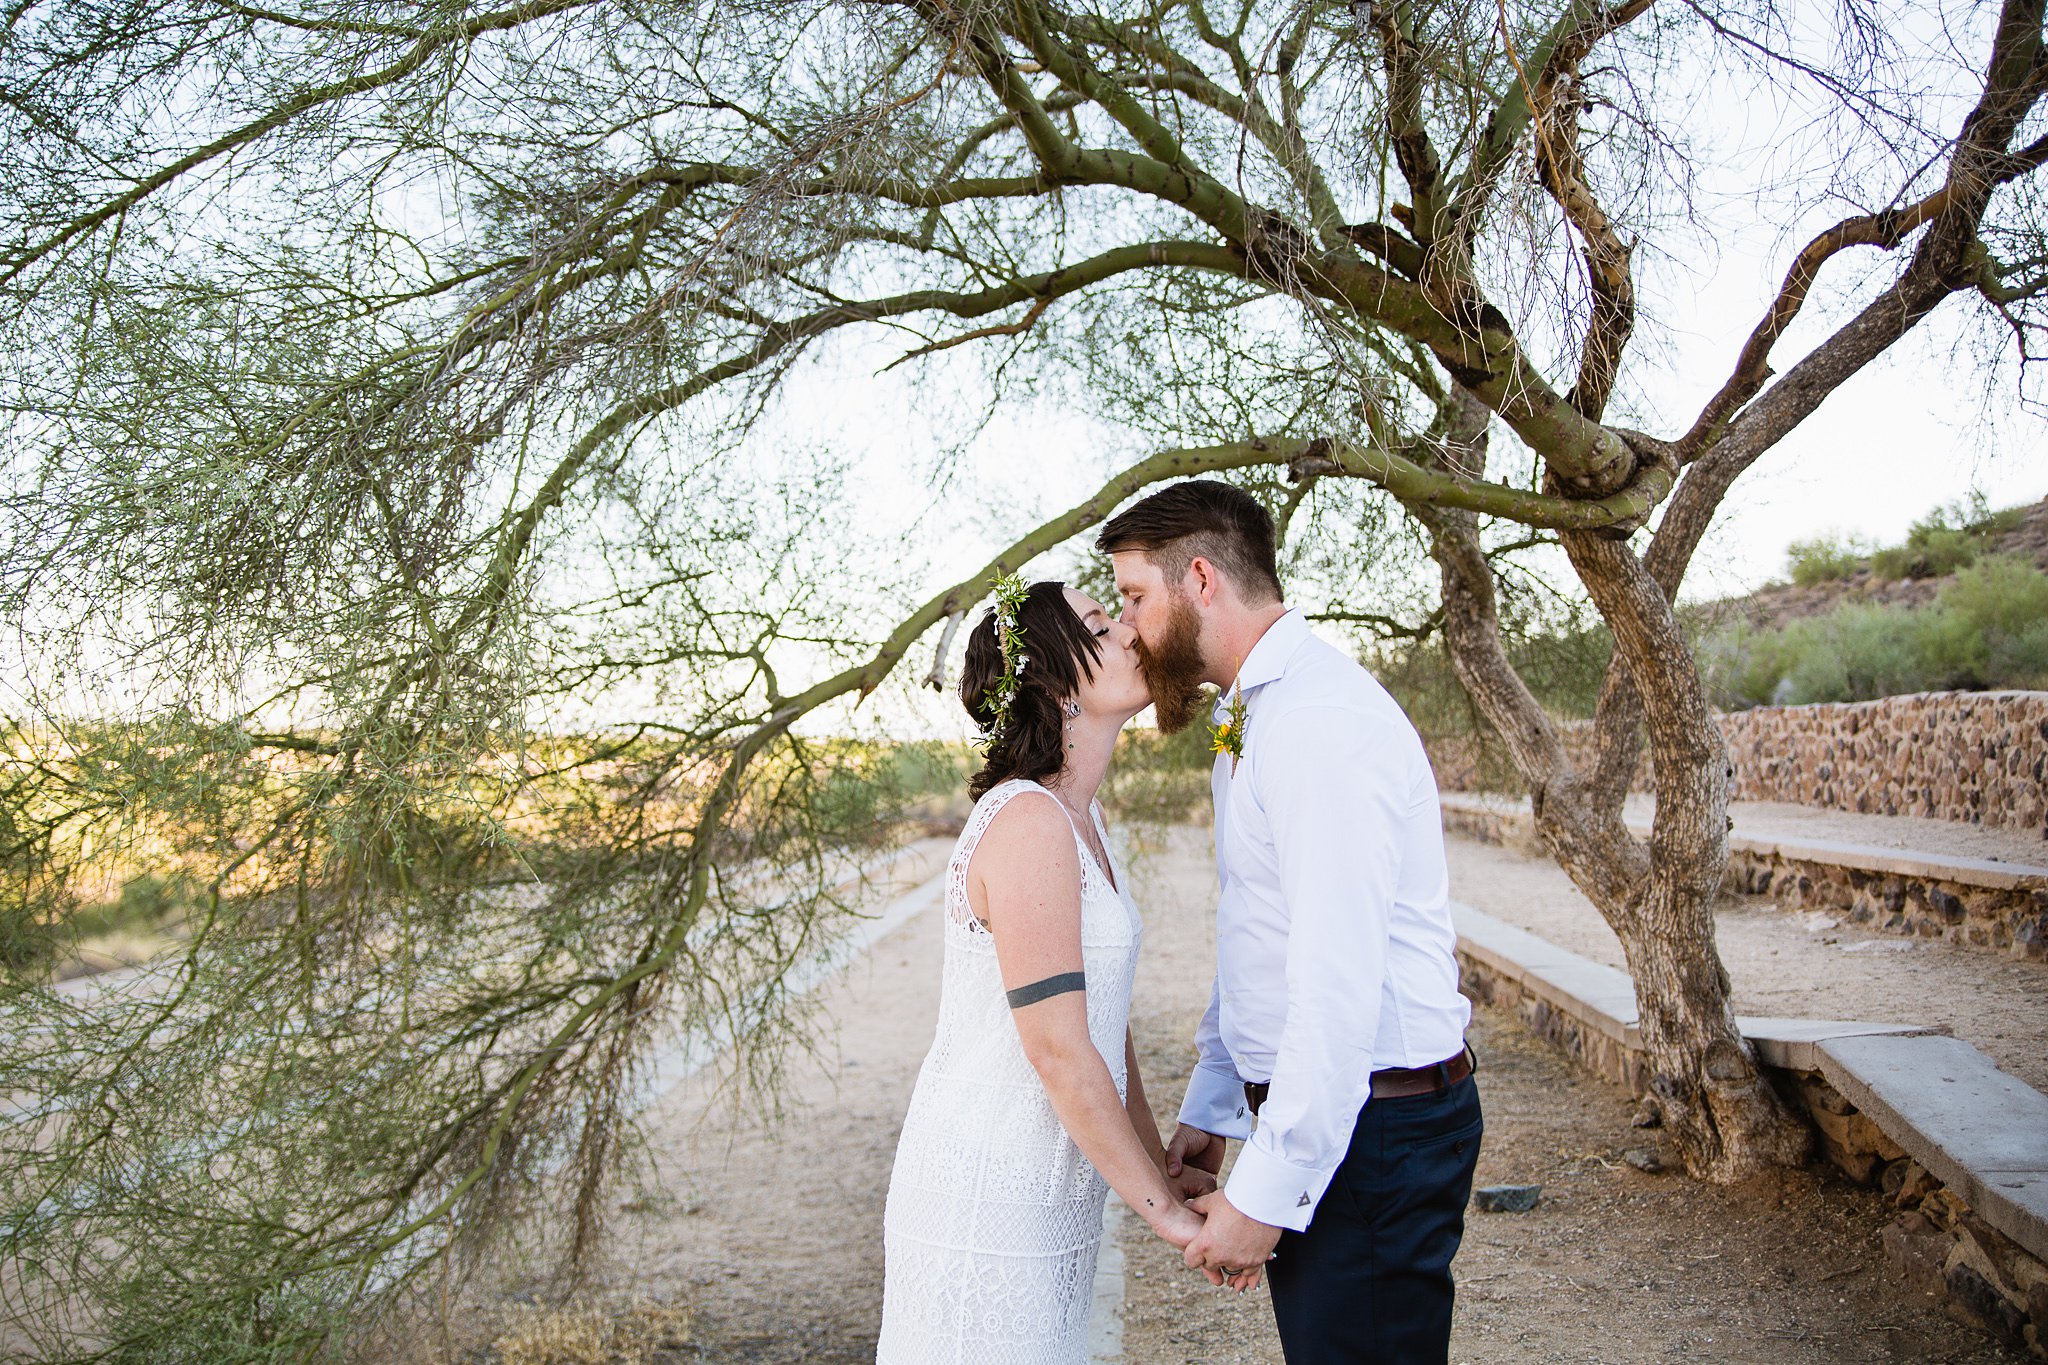 Simple boho inspired bride and groom share a kiss under a tree by Arizona wedding photographers PMA Photography.